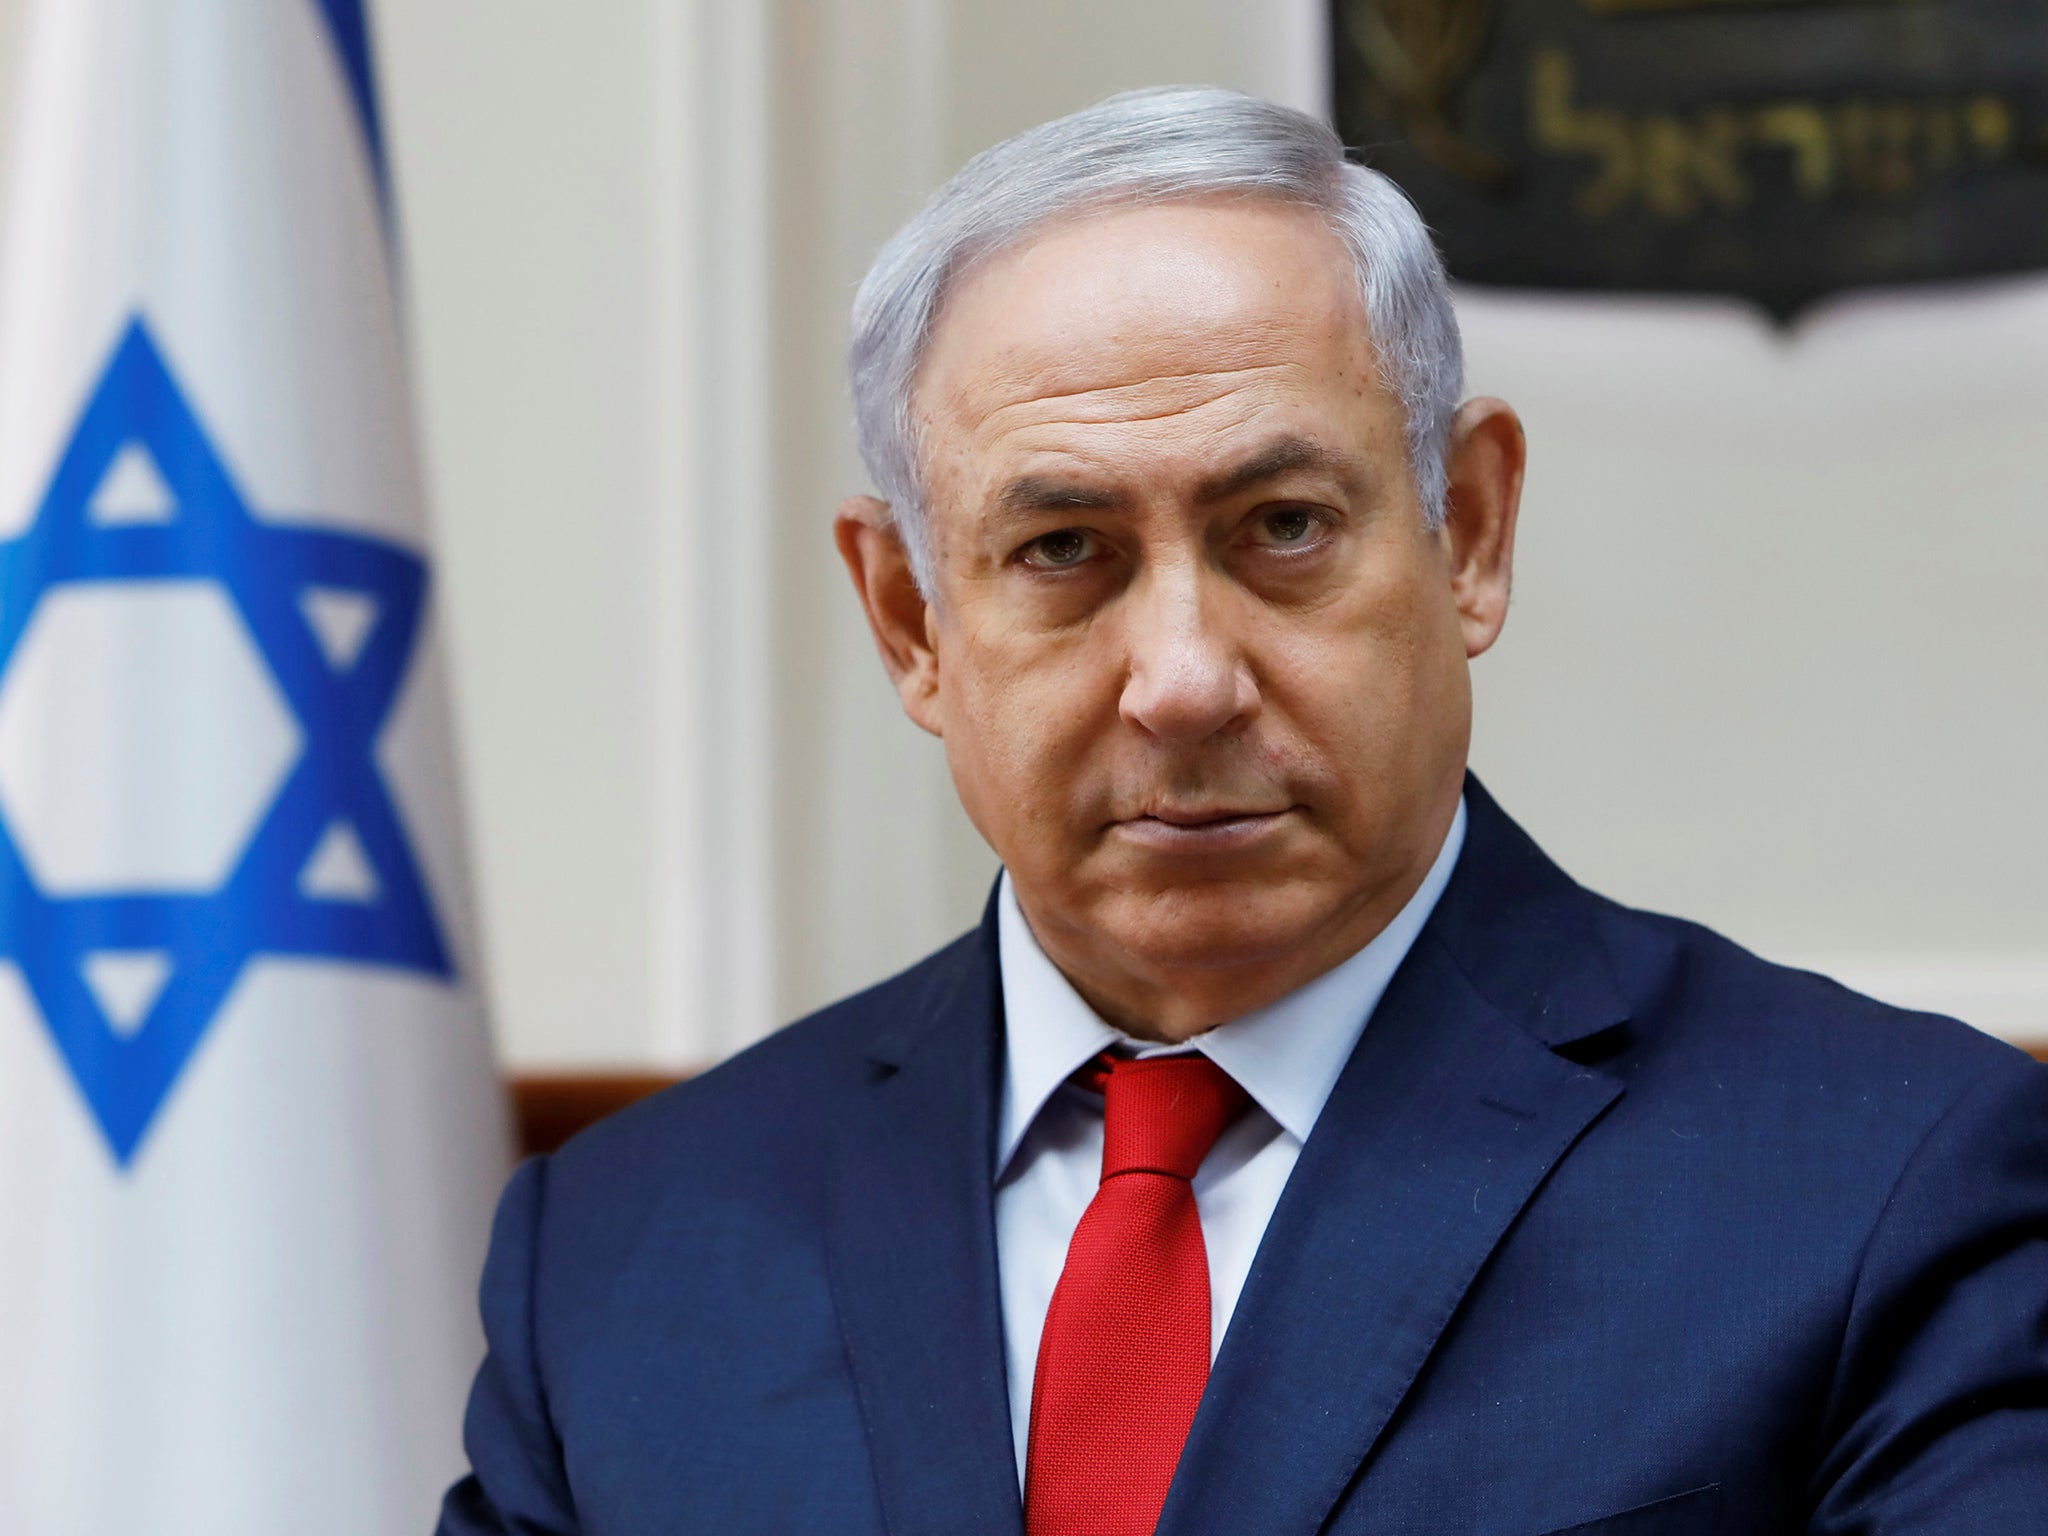 Israeli Prime Minister Benjamin Netanyahu is to make a visit to the UK